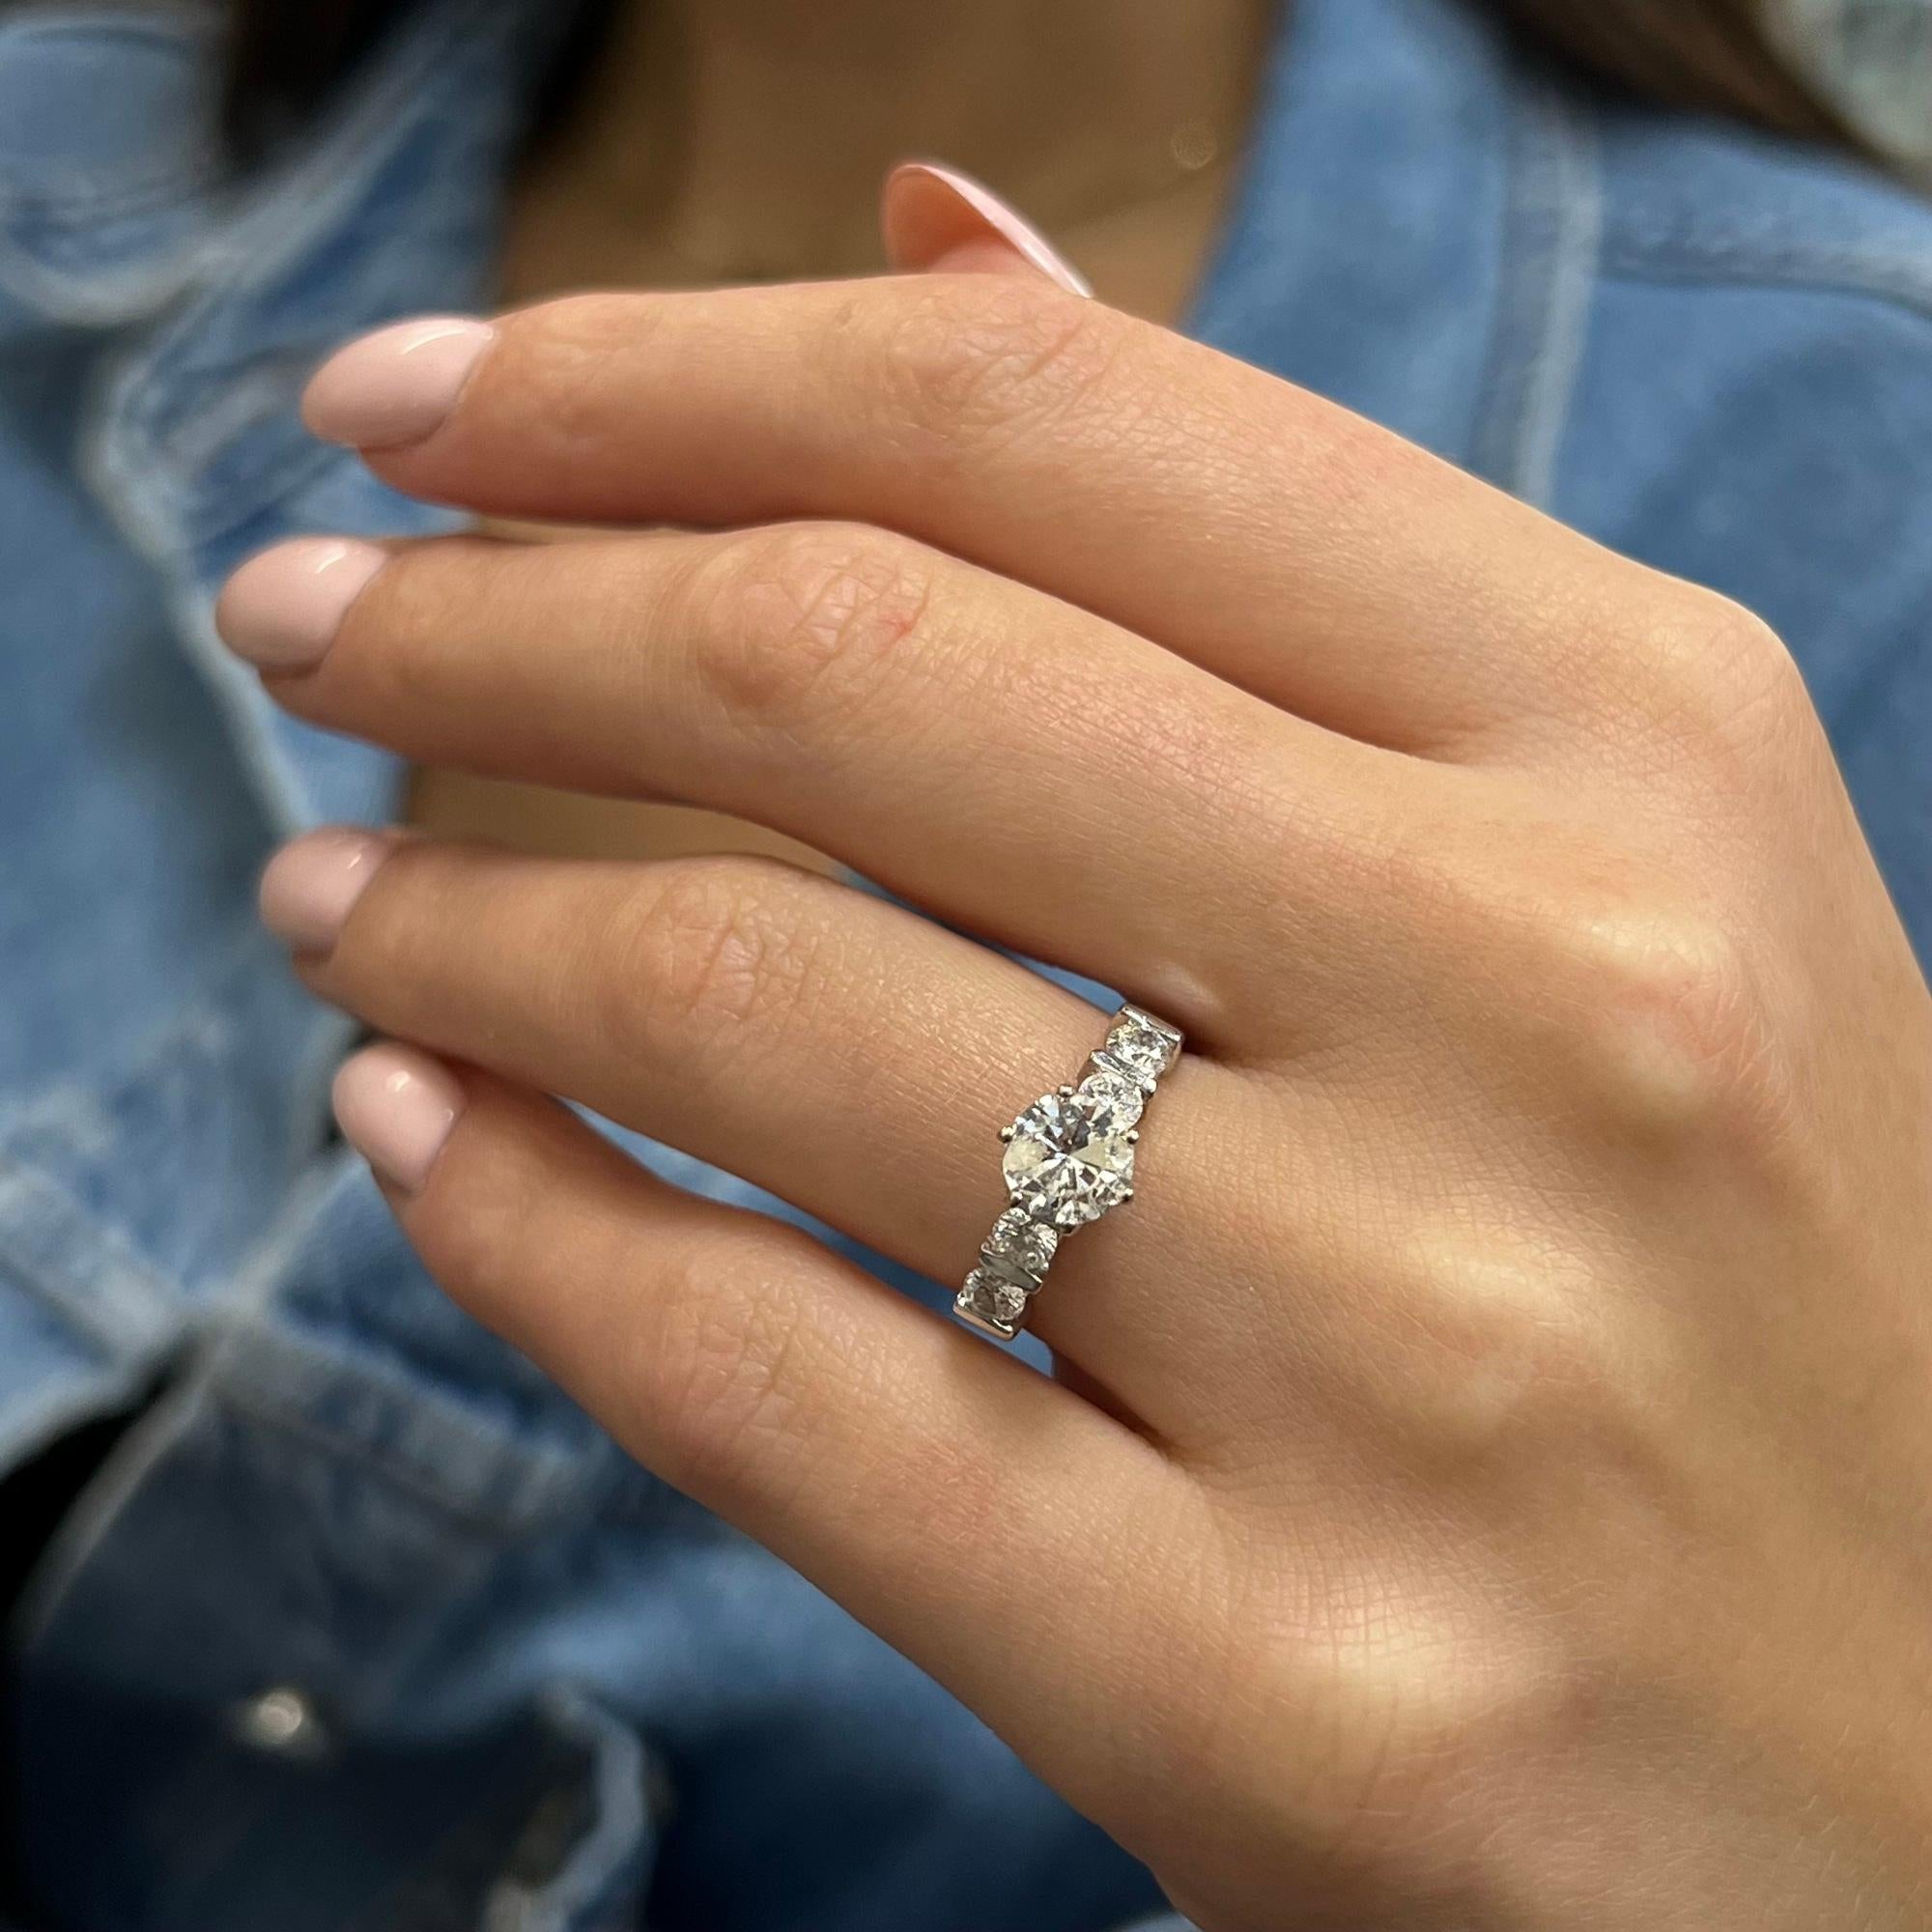 Women's Rachel Koen 1.35Cttw Round Cut Diamond Engagement Ring 14K White Gold Size 5.75 For Sale